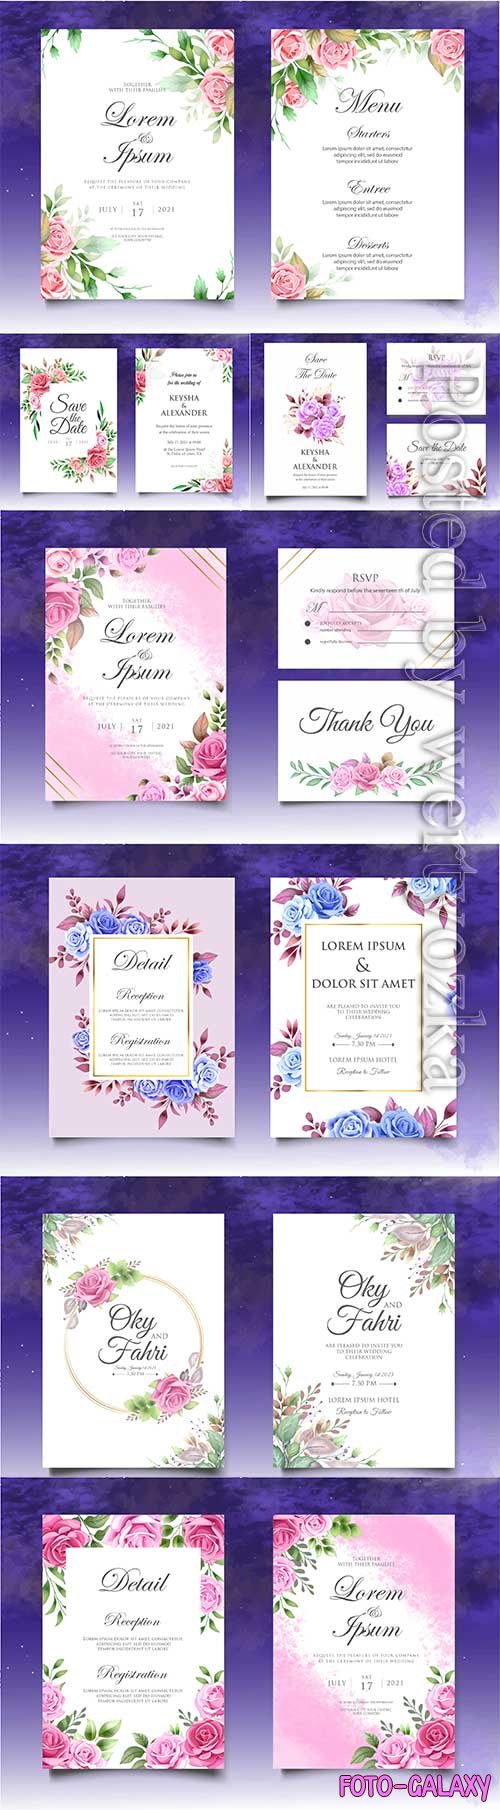 Wedding invitation card with decoration